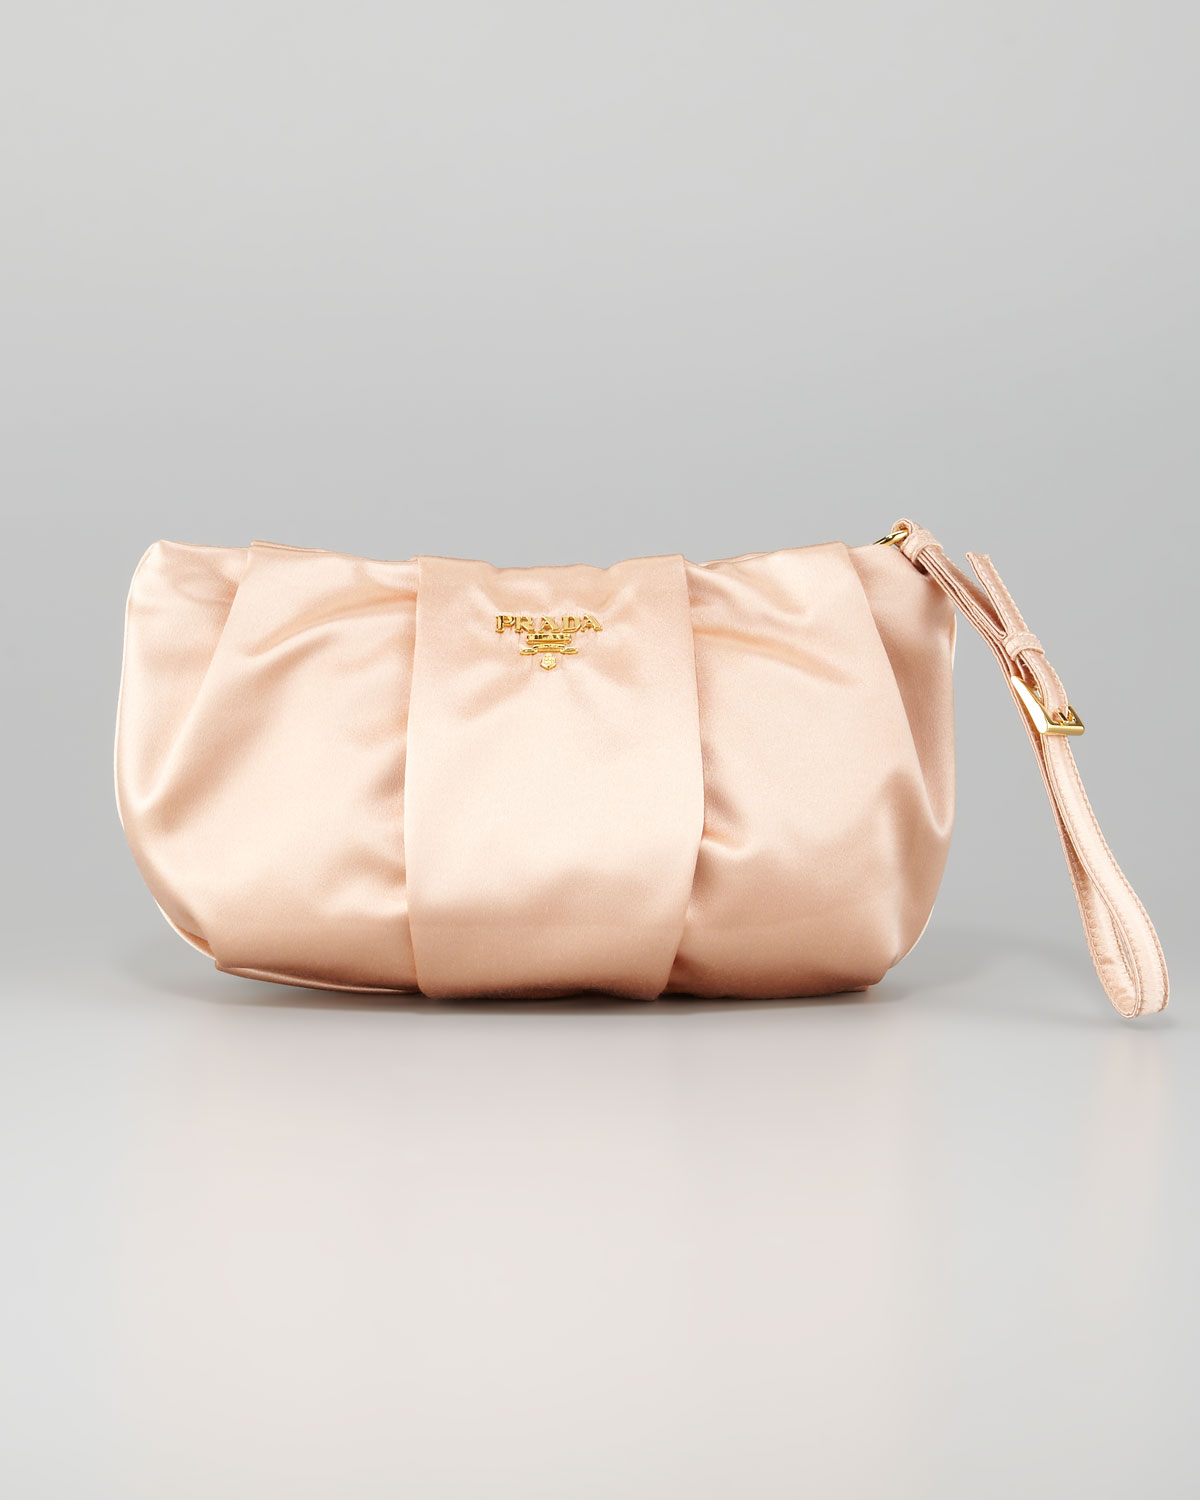 prada bag for man - Prada Satin Wristlet Bag in Beige (champagne) | Lyst